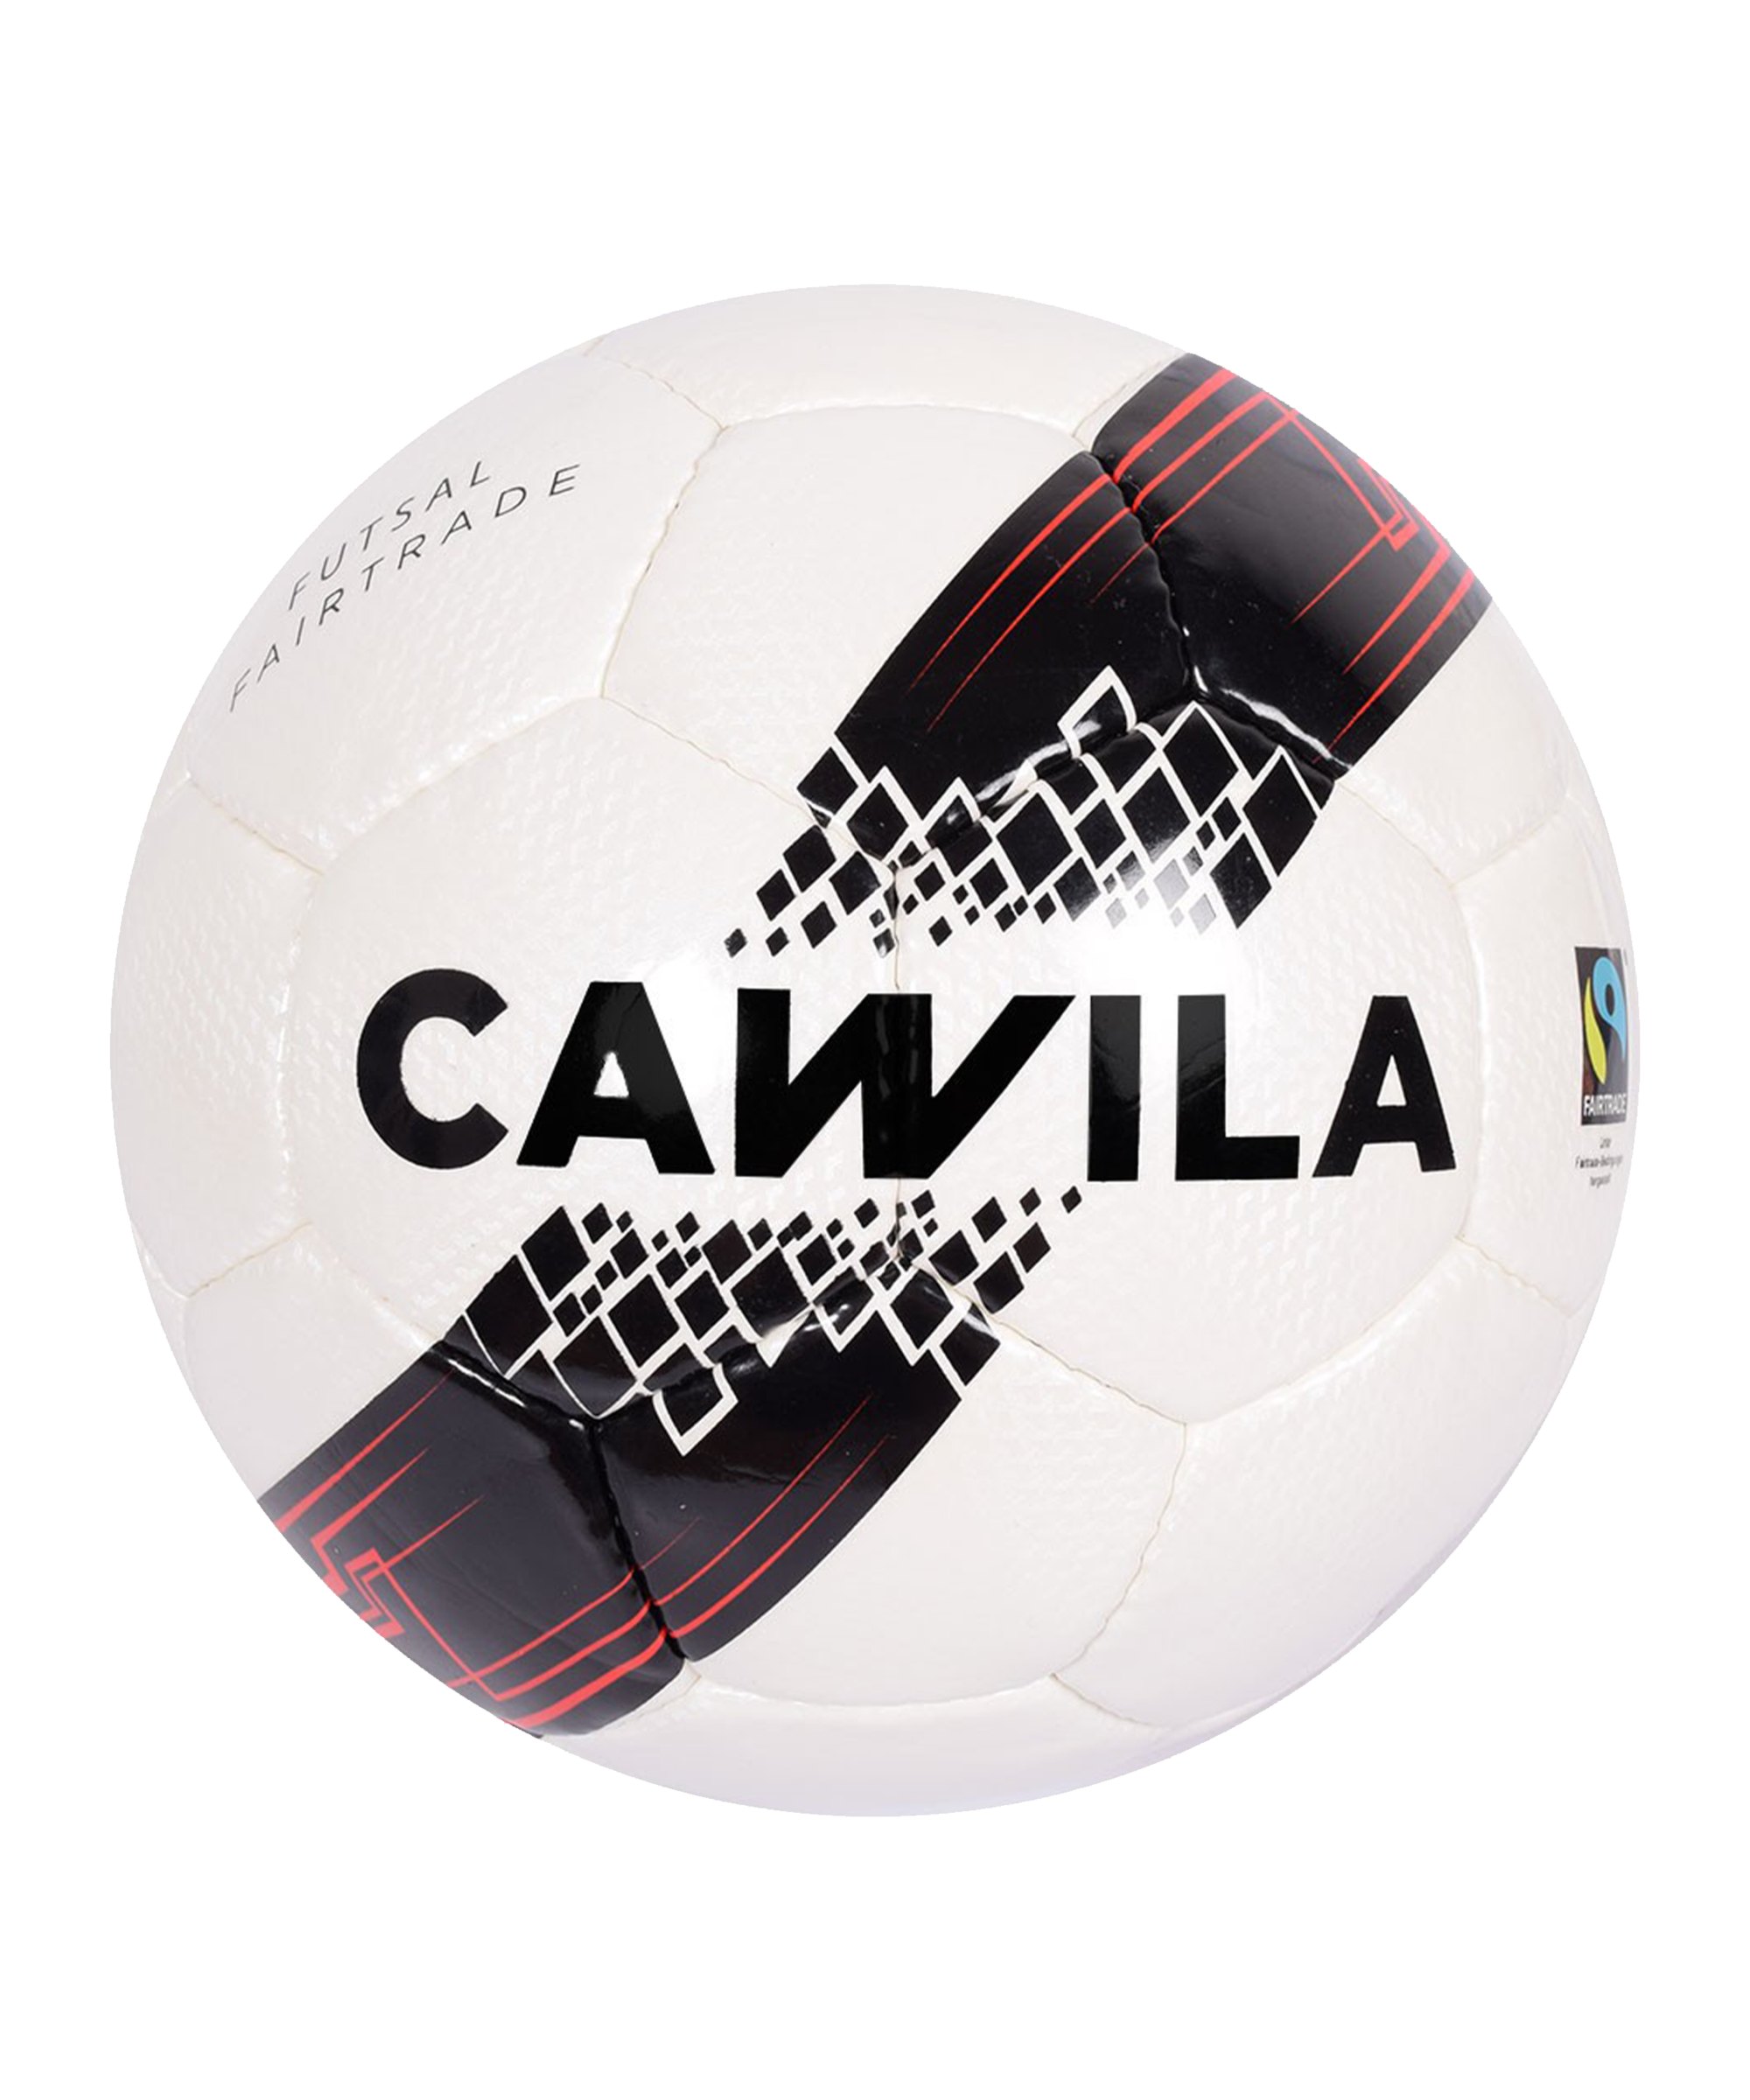 Cawila Futsal Fairtrade Trainingsball 430g Gr. 4 - weiss